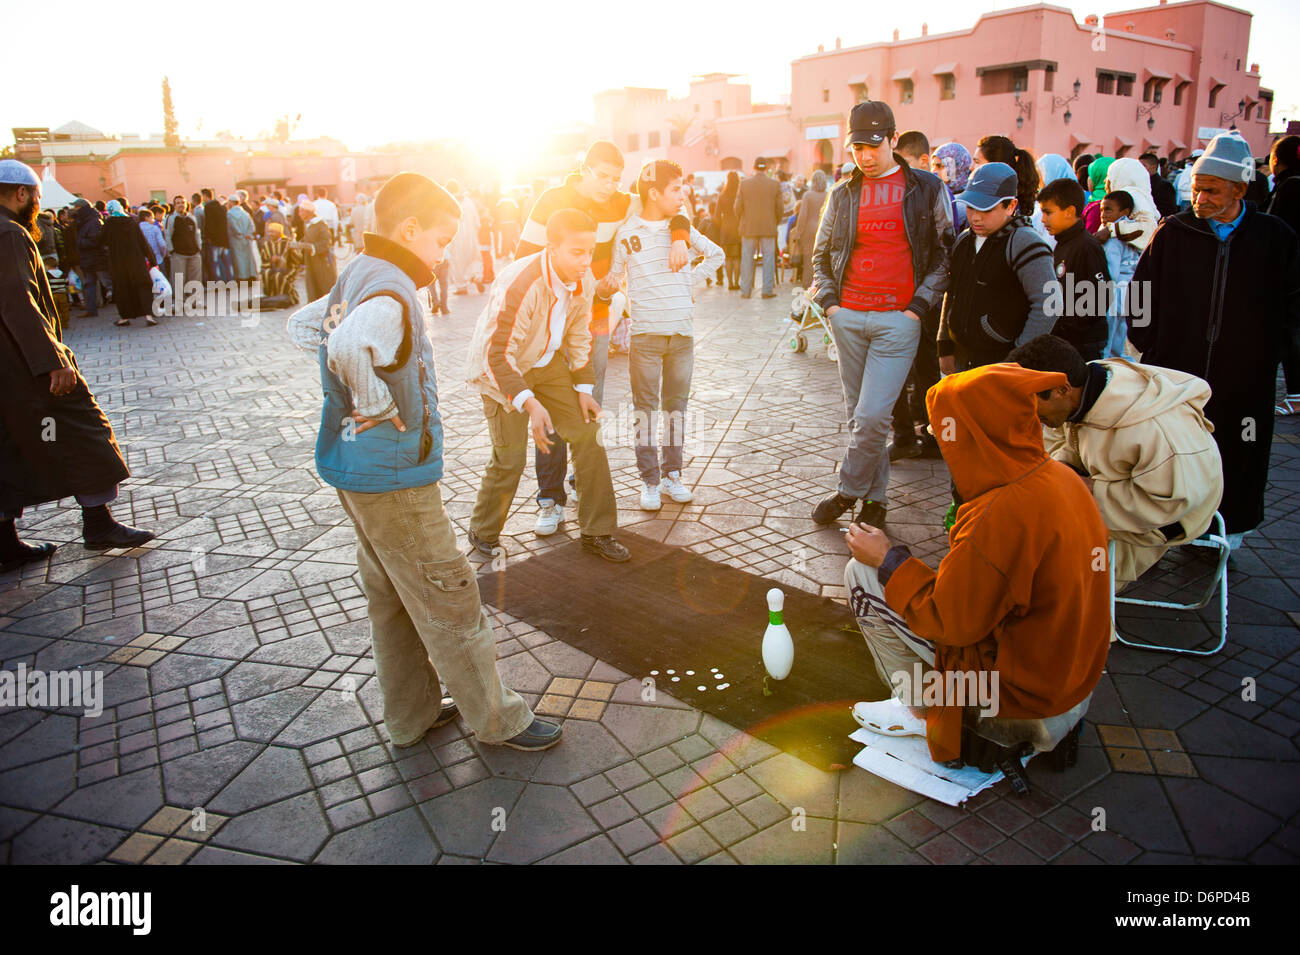 Marokkaner Straße spielen in Place Djemaa El Fna, dem berühmten Platz in Marrakesch, Marokko, Nordafrika, Afrika Stockfoto